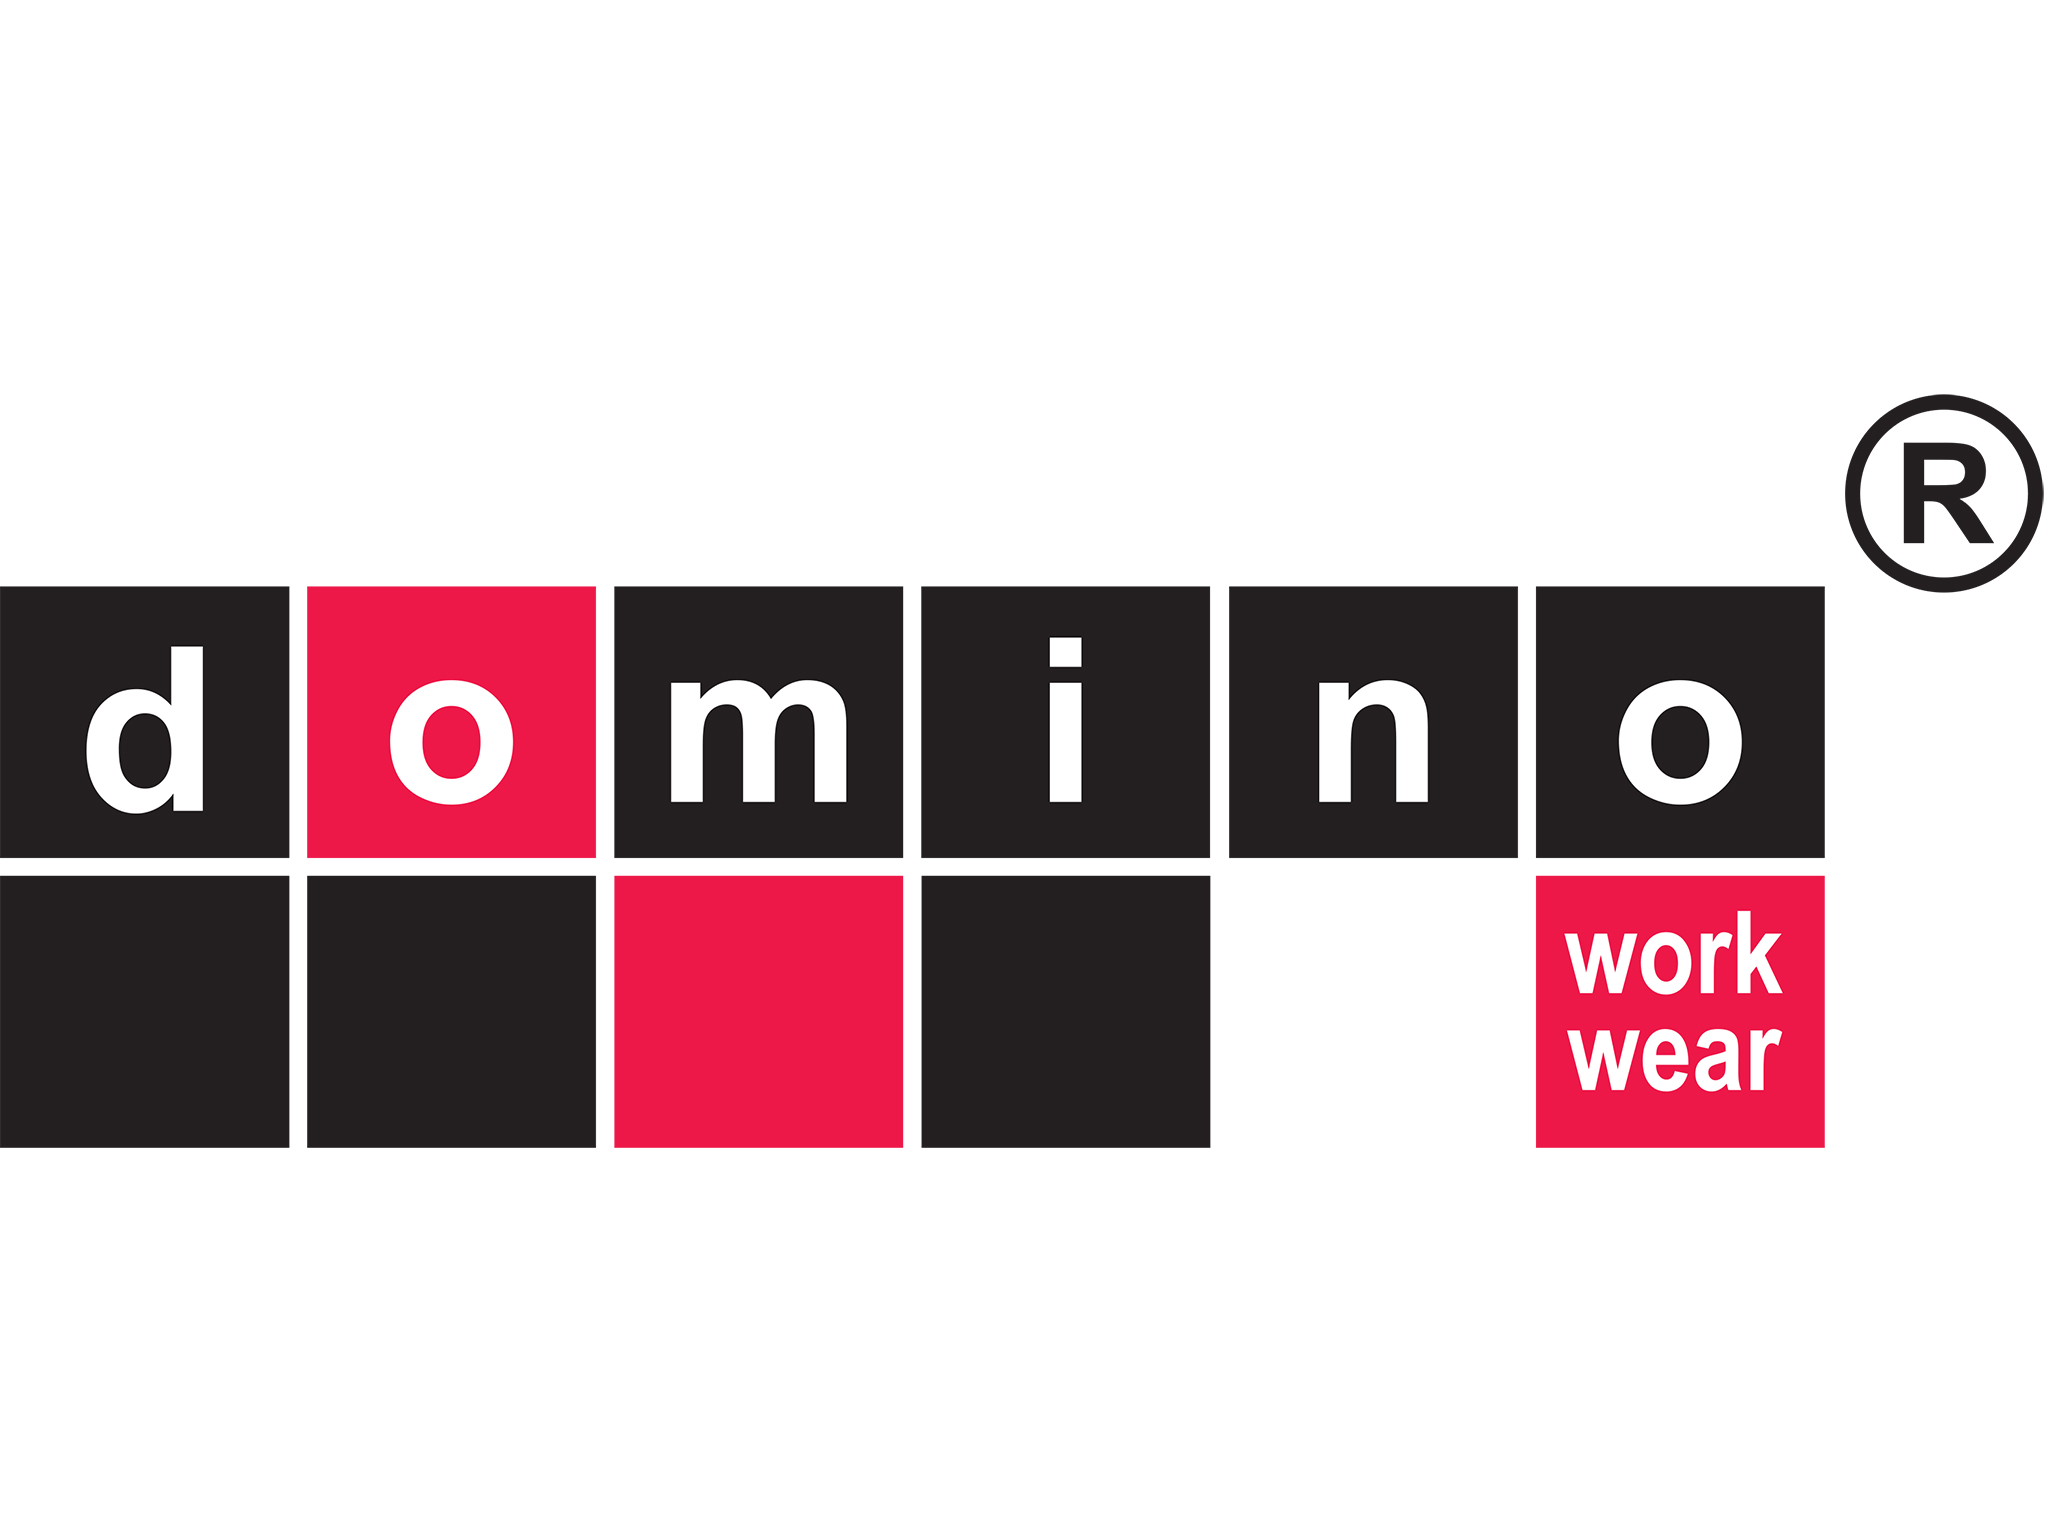 domino work wear logo